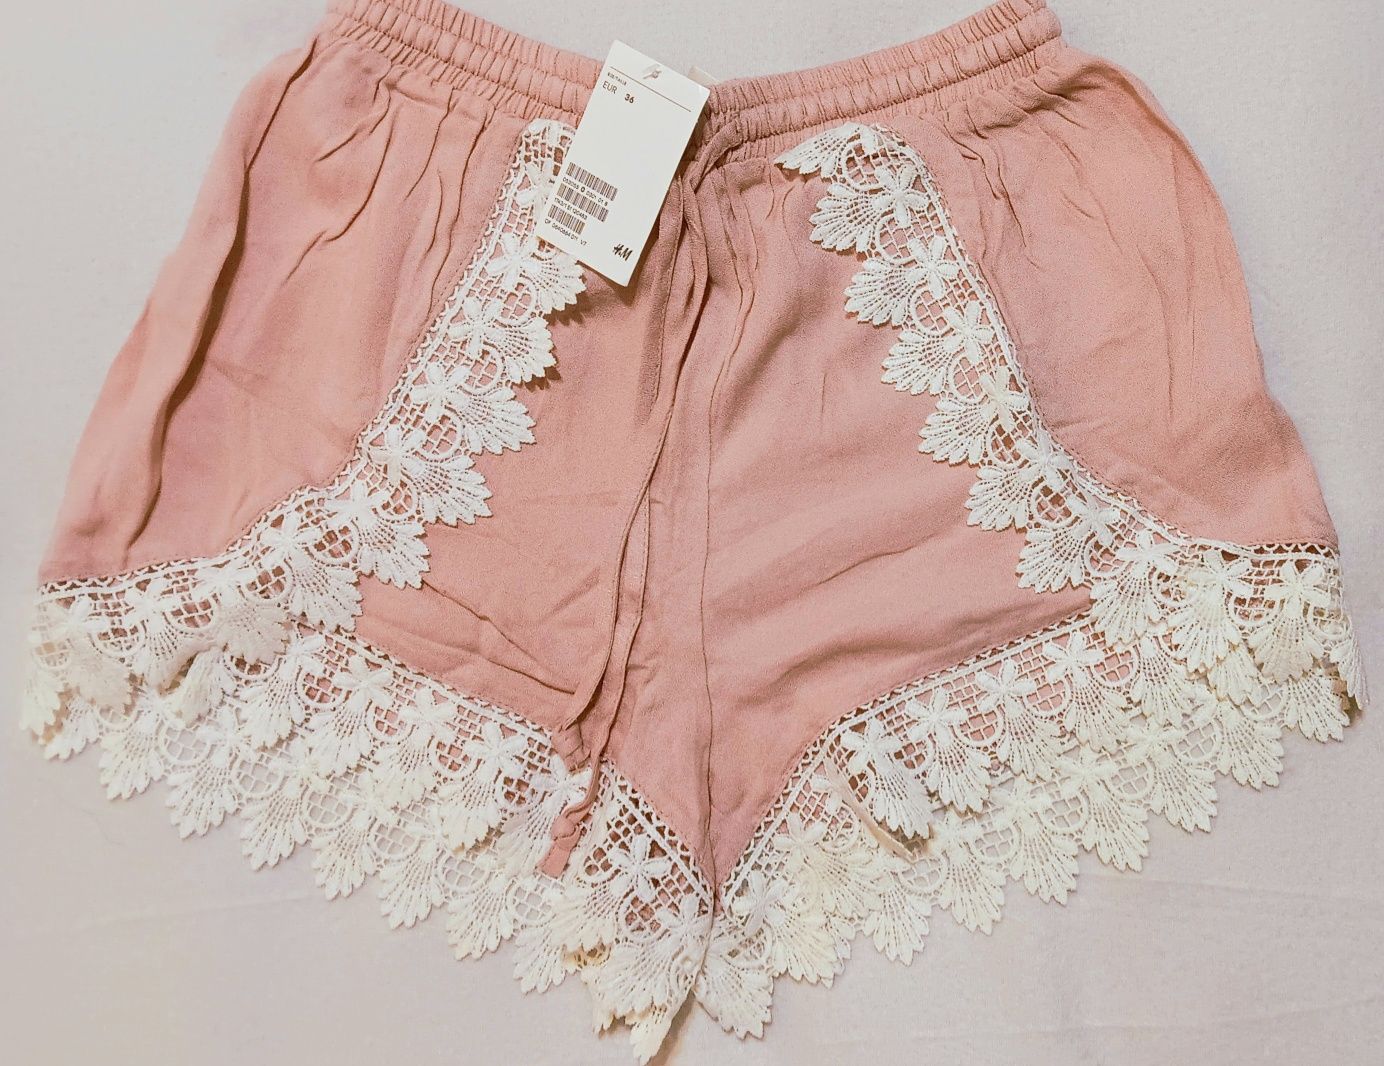 Pantaloni Scurti Roz cu Dantela H&M